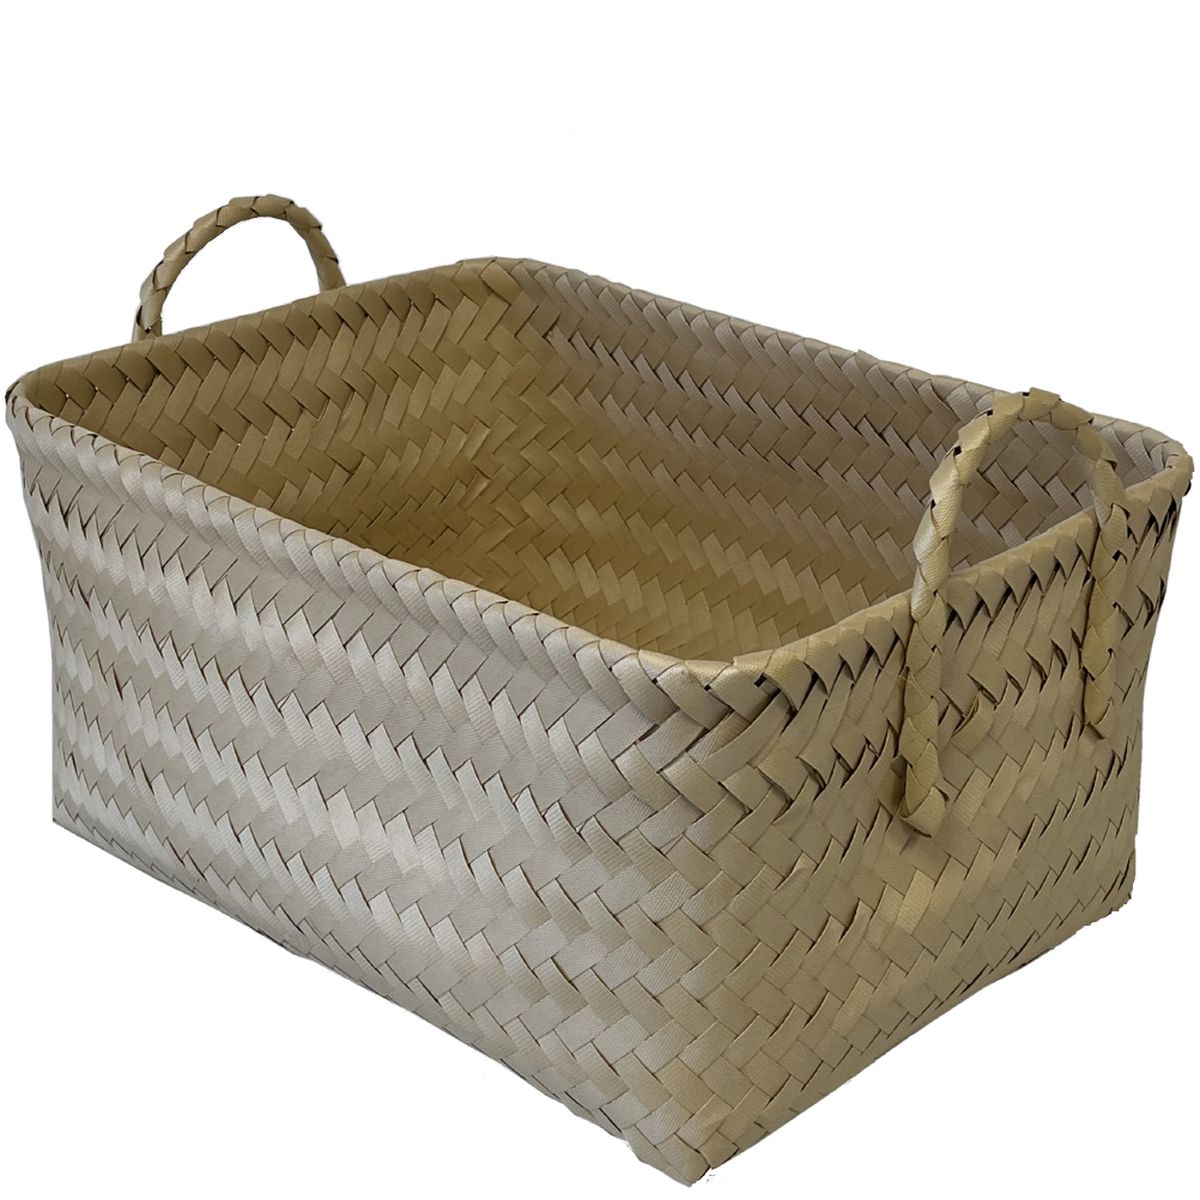 Braided paper fiber basket - Beige - 40 cm